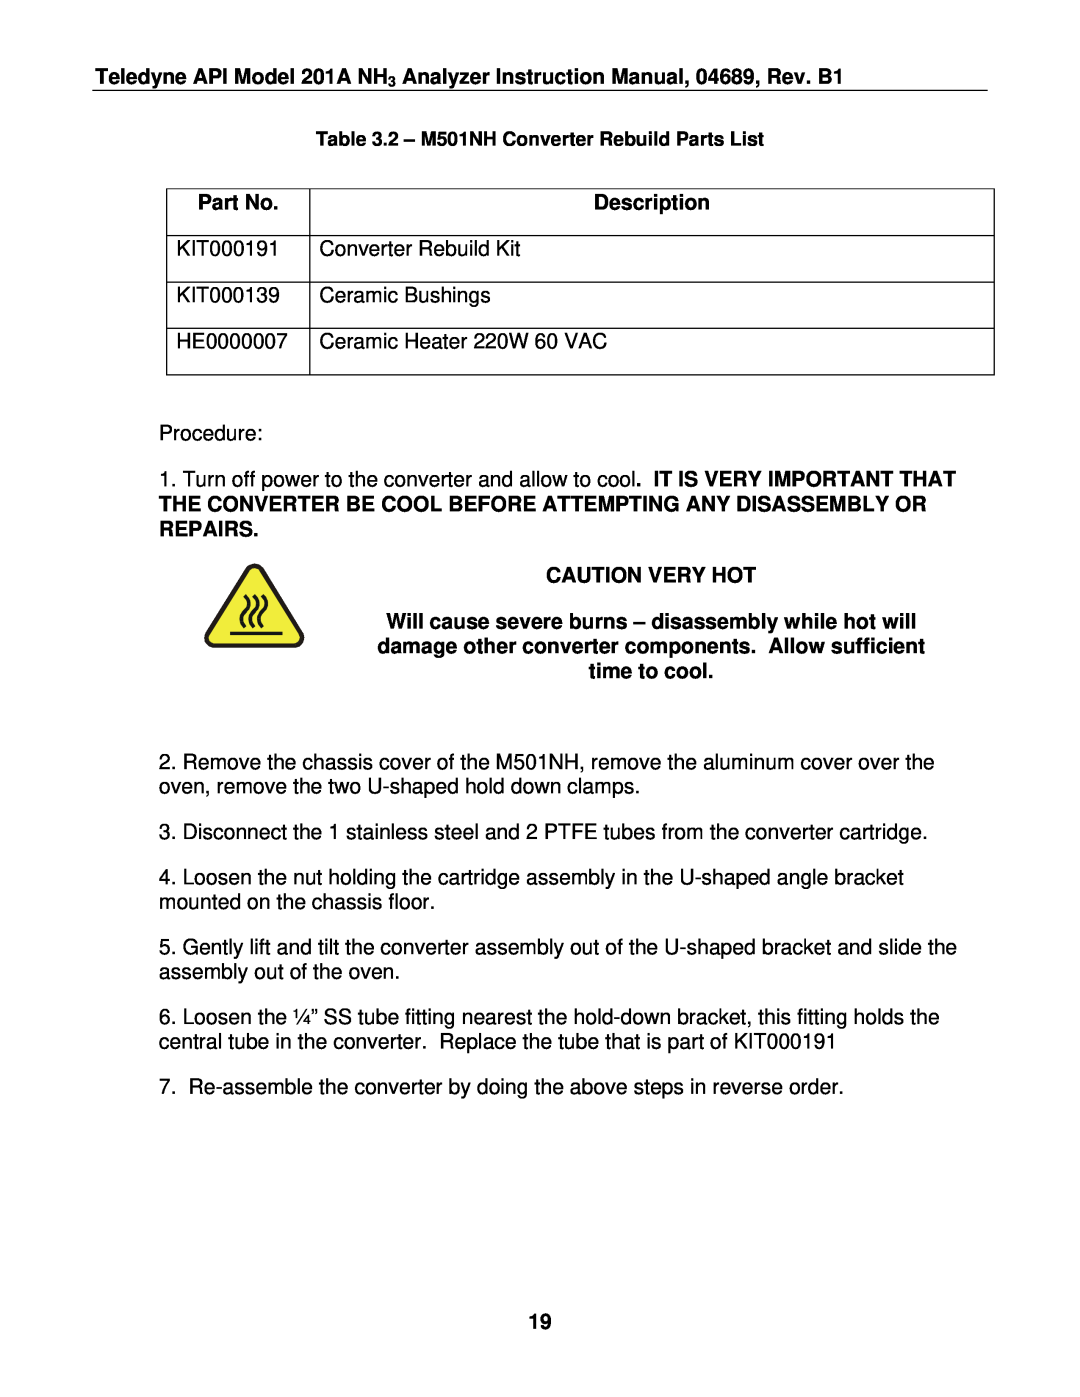 Teledyne 201A manual Description, Caution Very Hot 